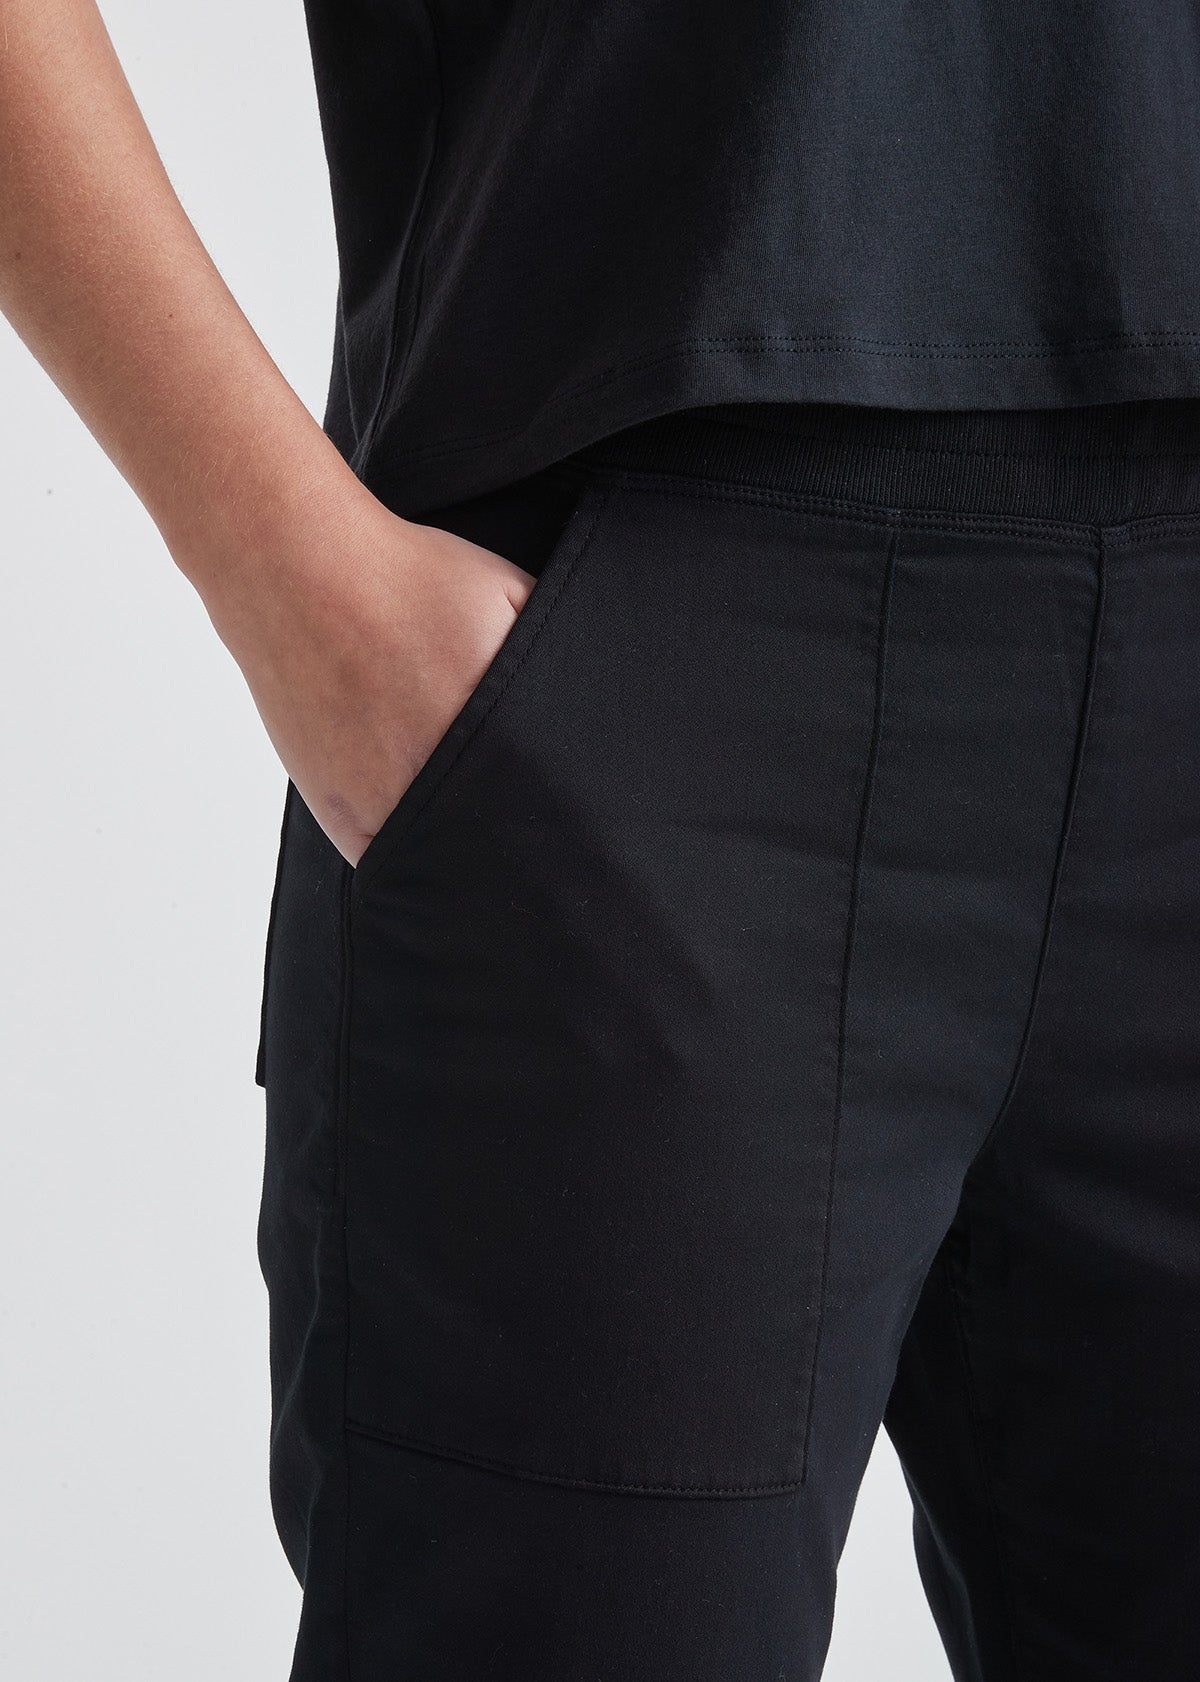 Women's Ultra Soft Woven Jogger Capri Pants With Pockets